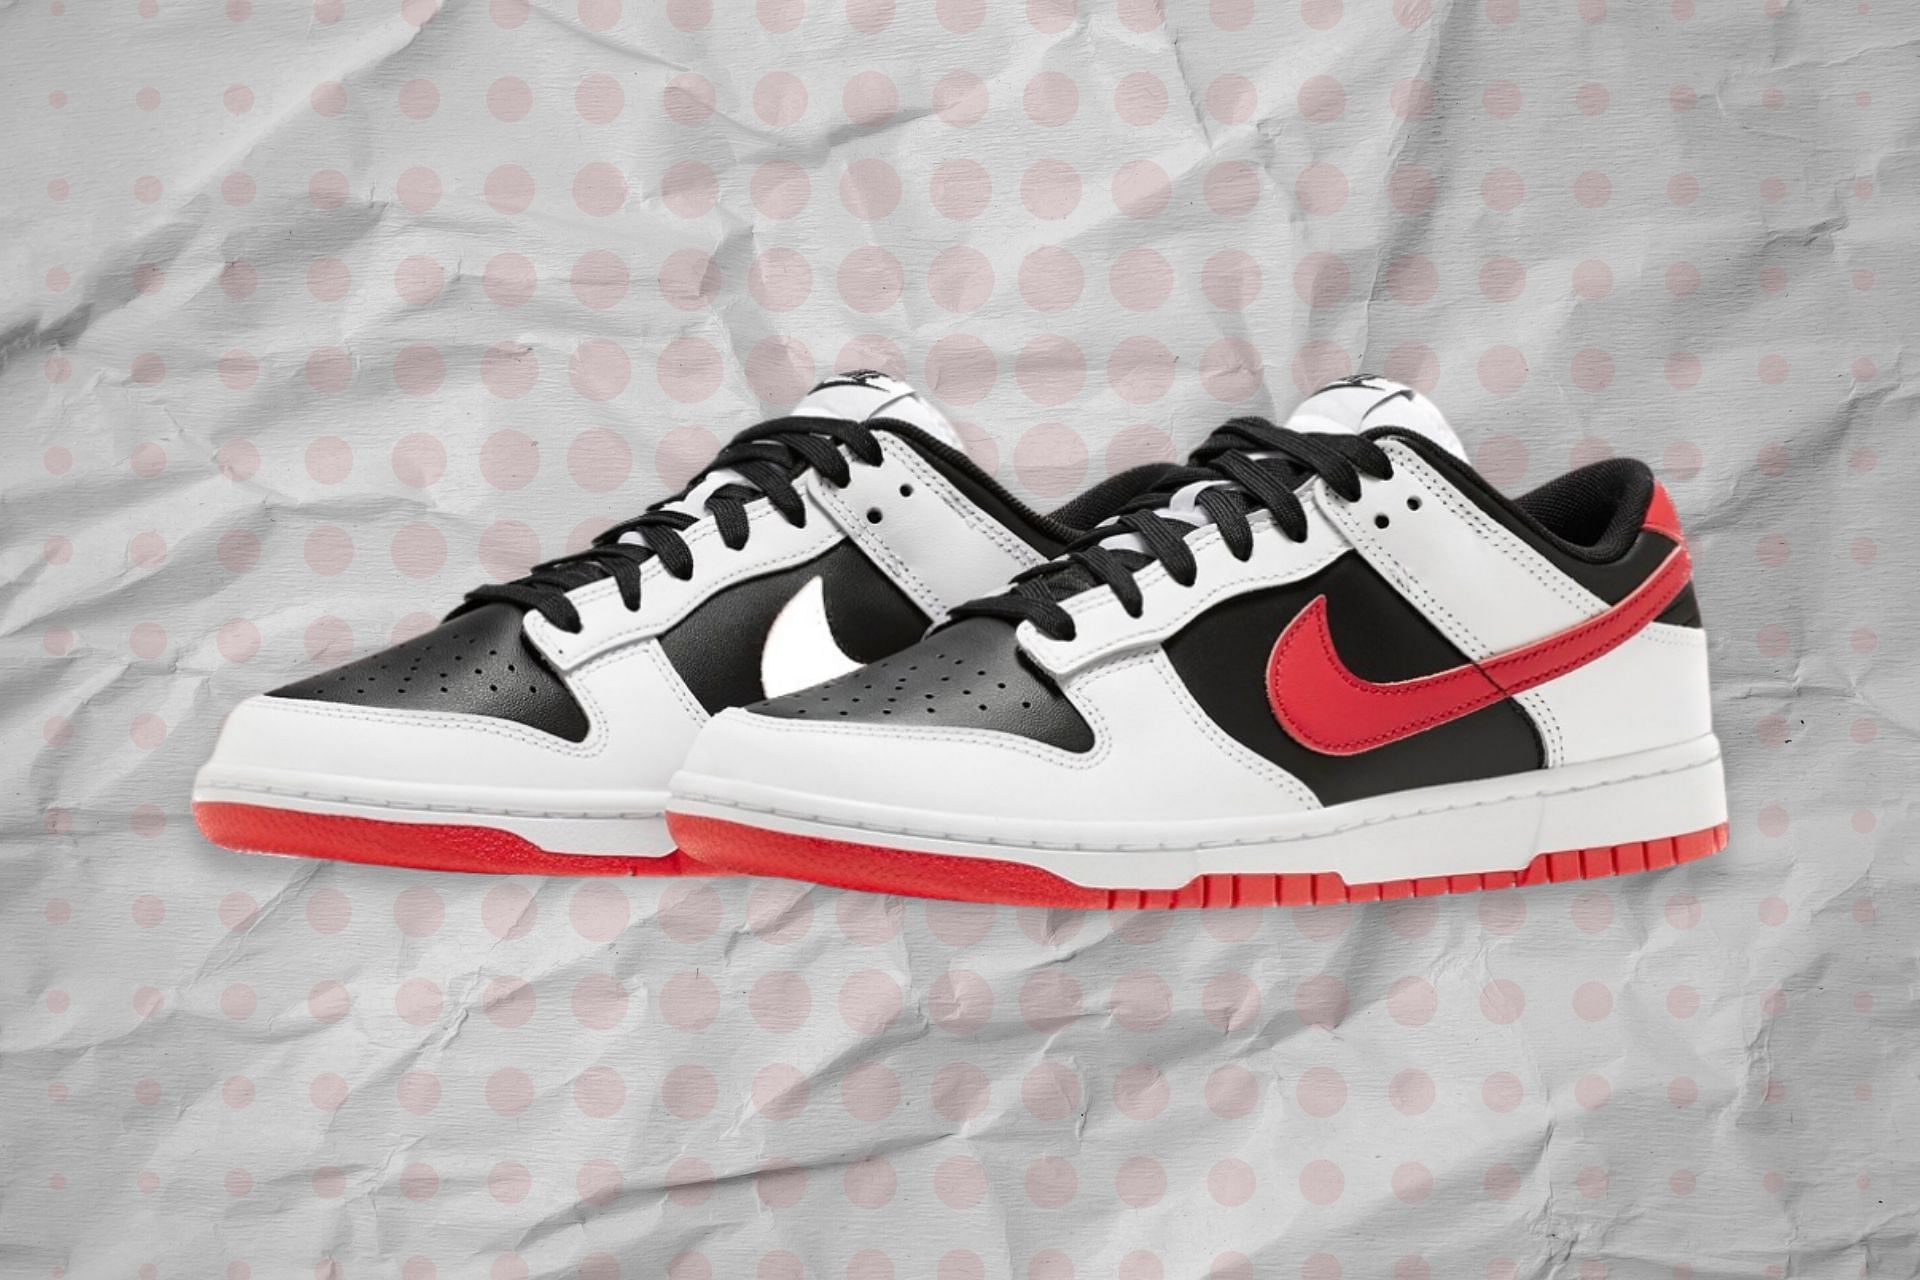 Nike Dunk Low Reverse White Black Red colorway (Image via Nike)